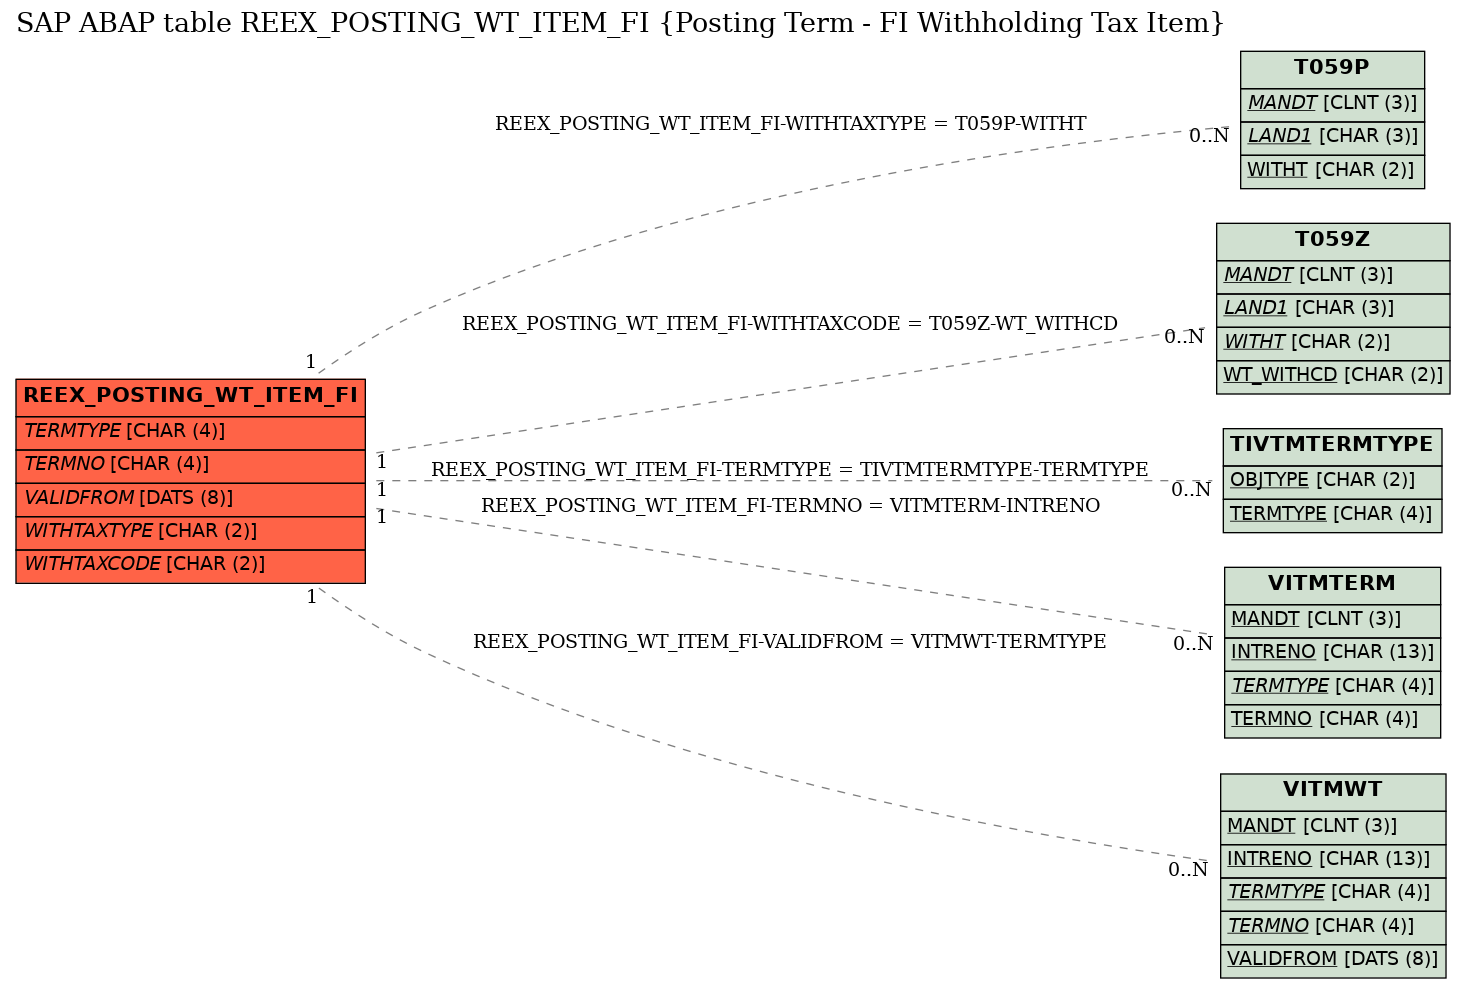 E-R Diagram for table REEX_POSTING_WT_ITEM_FI (Posting Term - FI Withholding Tax Item)